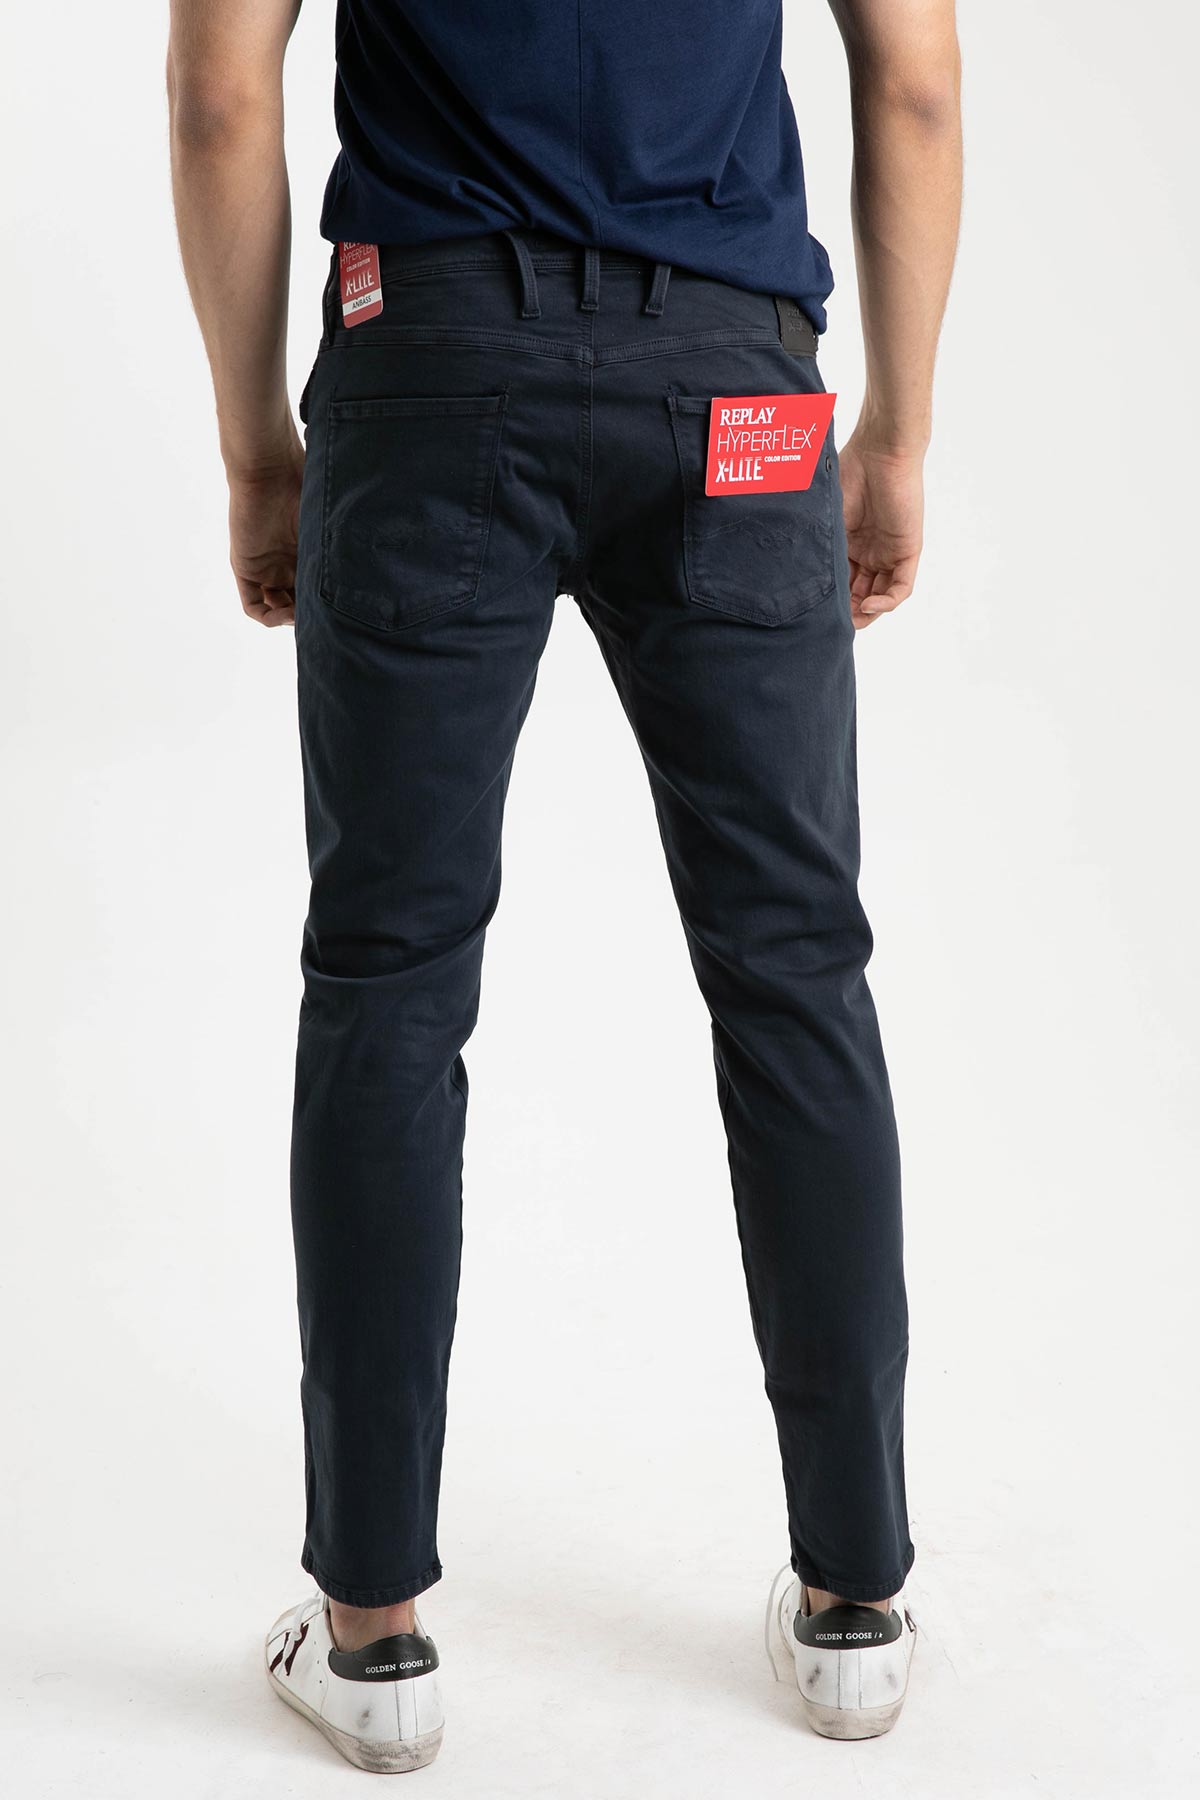 Replay Anbass Hyperflex X-Lite Slim Fit Jeans-Libas Trendy Fashion Store